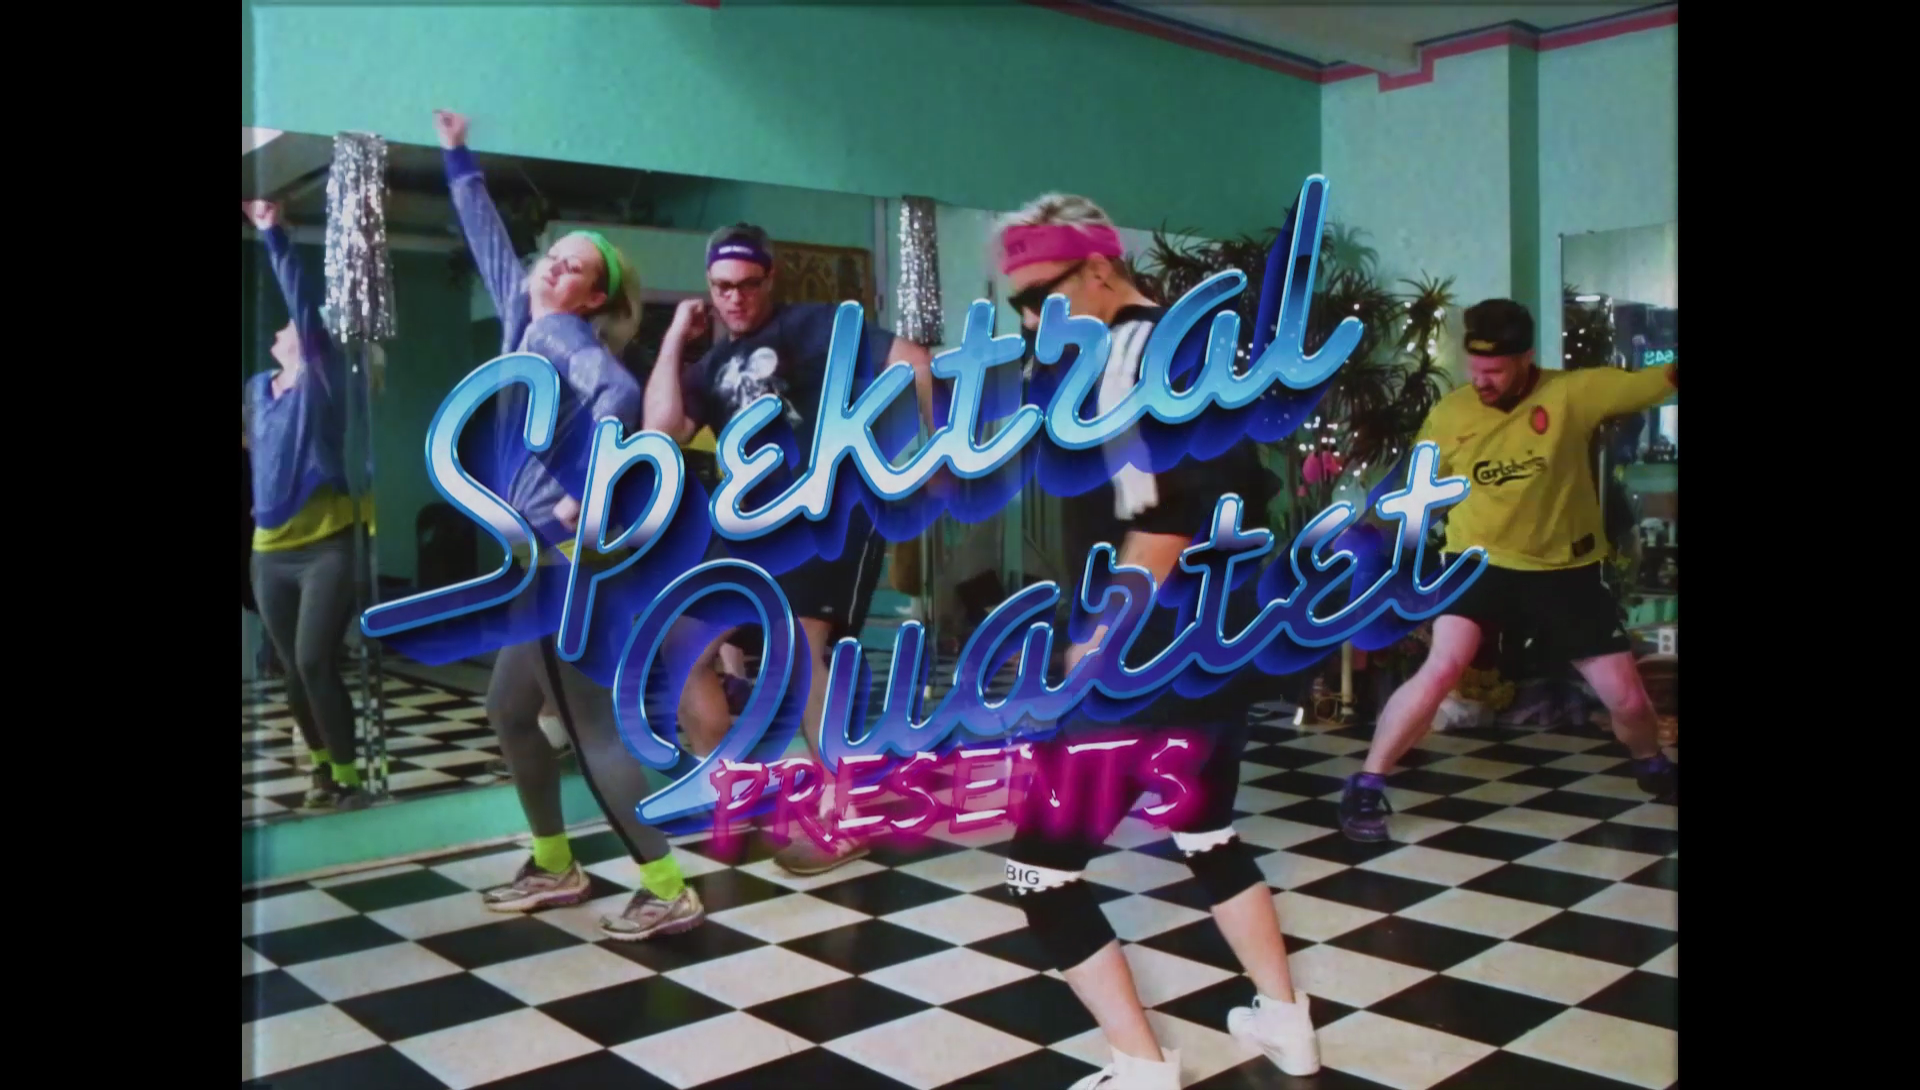 Spektral Quartet Promotional Videos